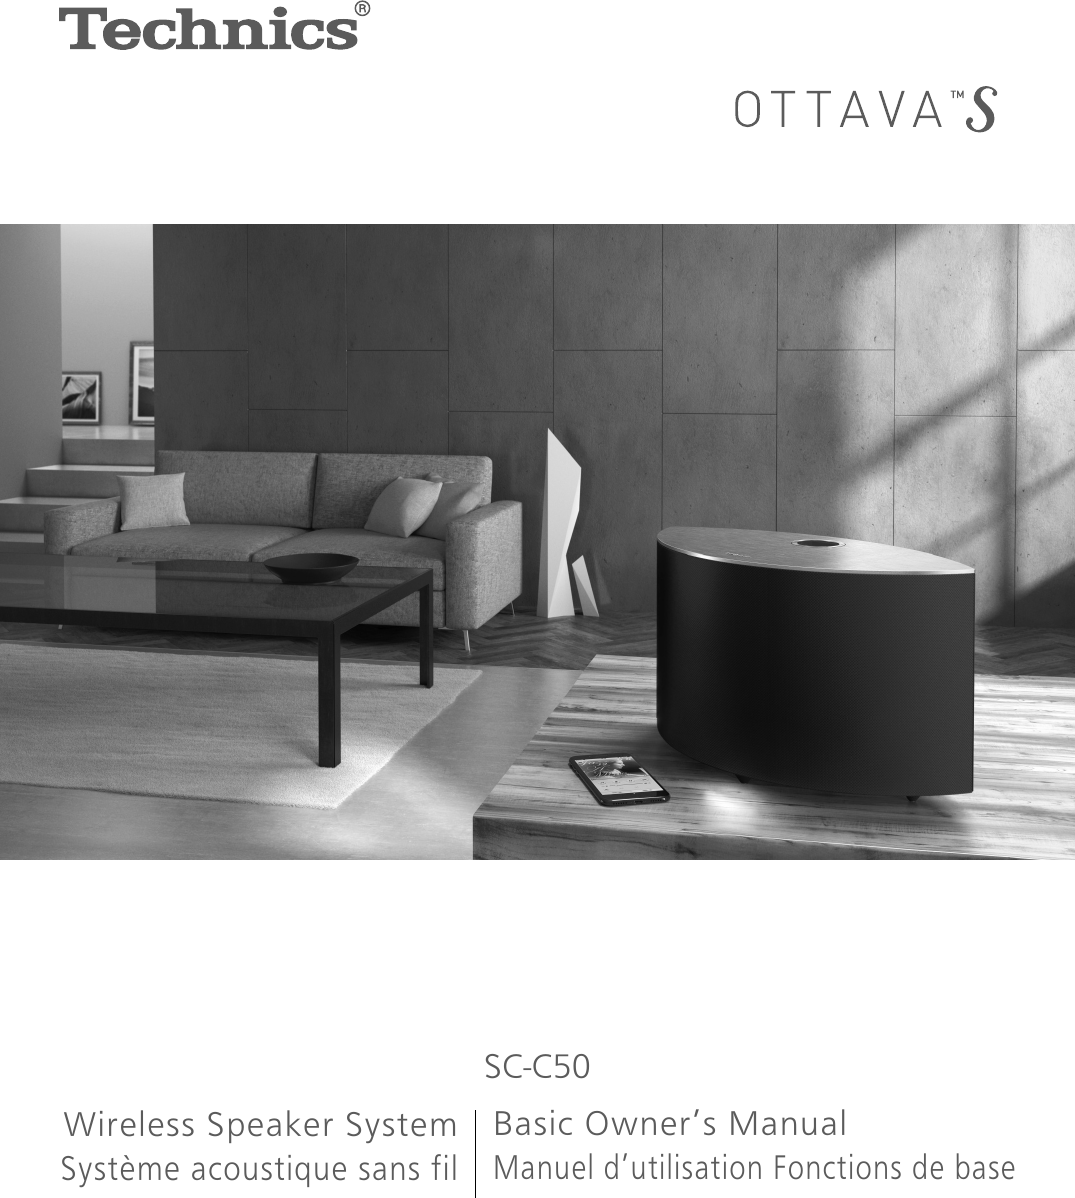 SC-C50Wireless Speaker SystemSystème acoustique sans filBasic Owner’s ManualManuel d’utilisation Fonctions de base